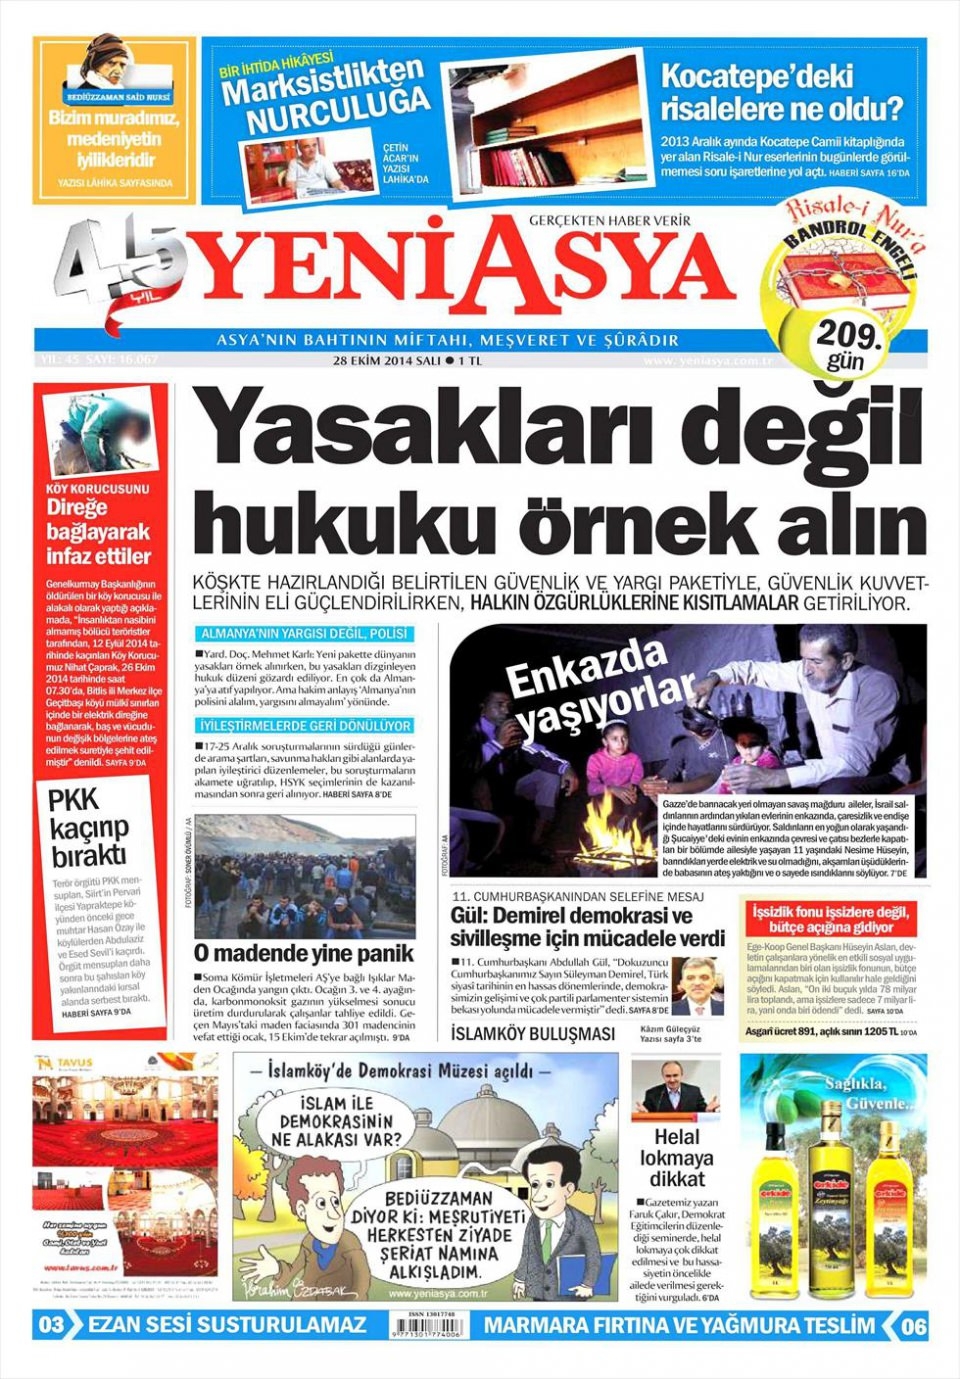 28 Ekim 2014 gazete manşetleri 22